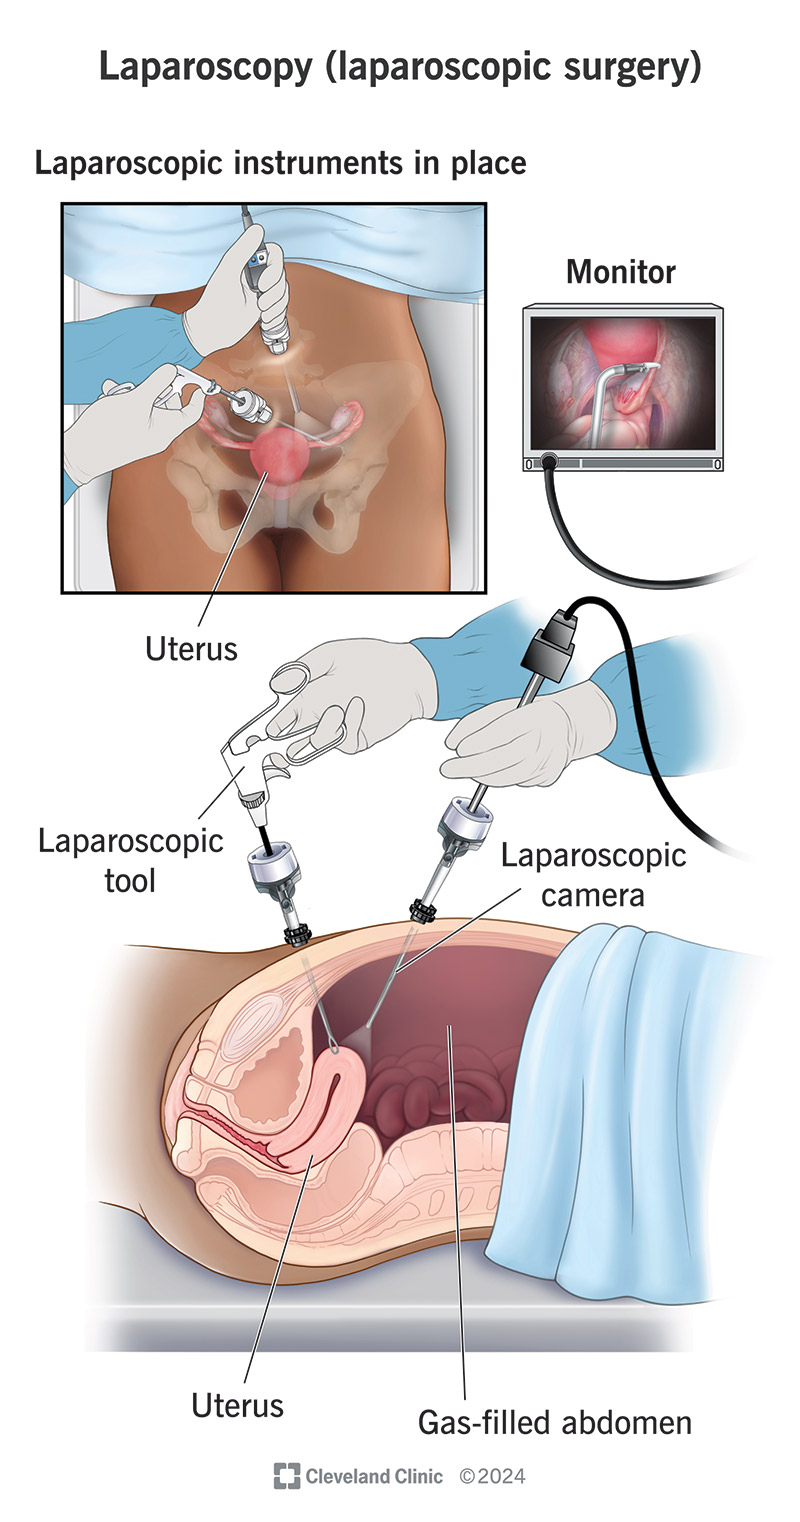 Surgeon doing laparoscopic surgery on uterus using laparoscopic instruments, a camera and a viewing screen.